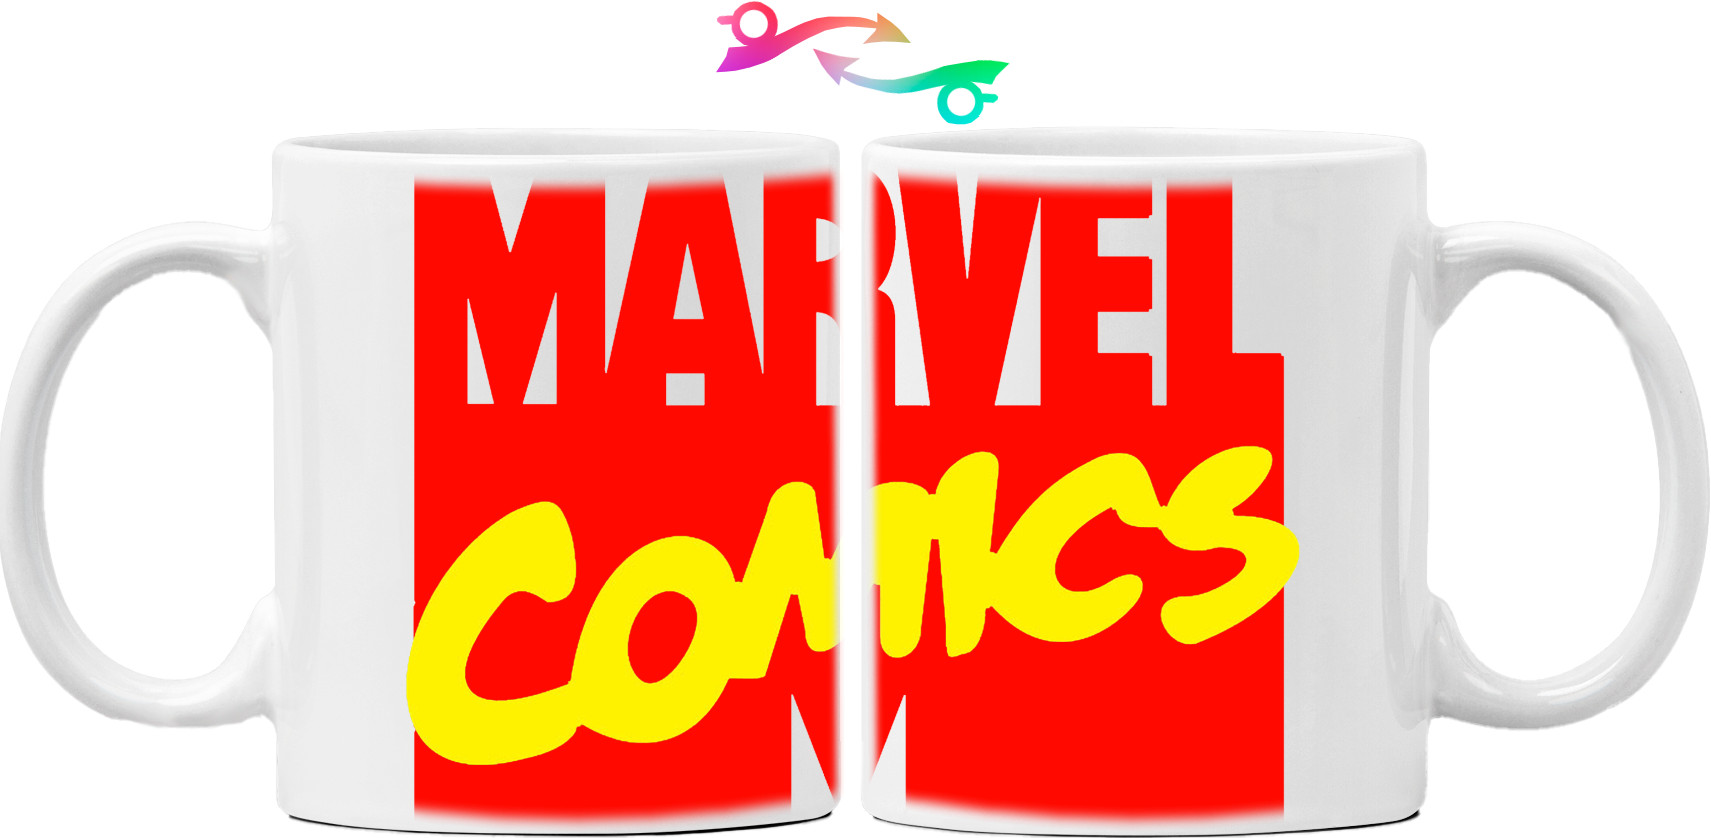 Marvel comics 2